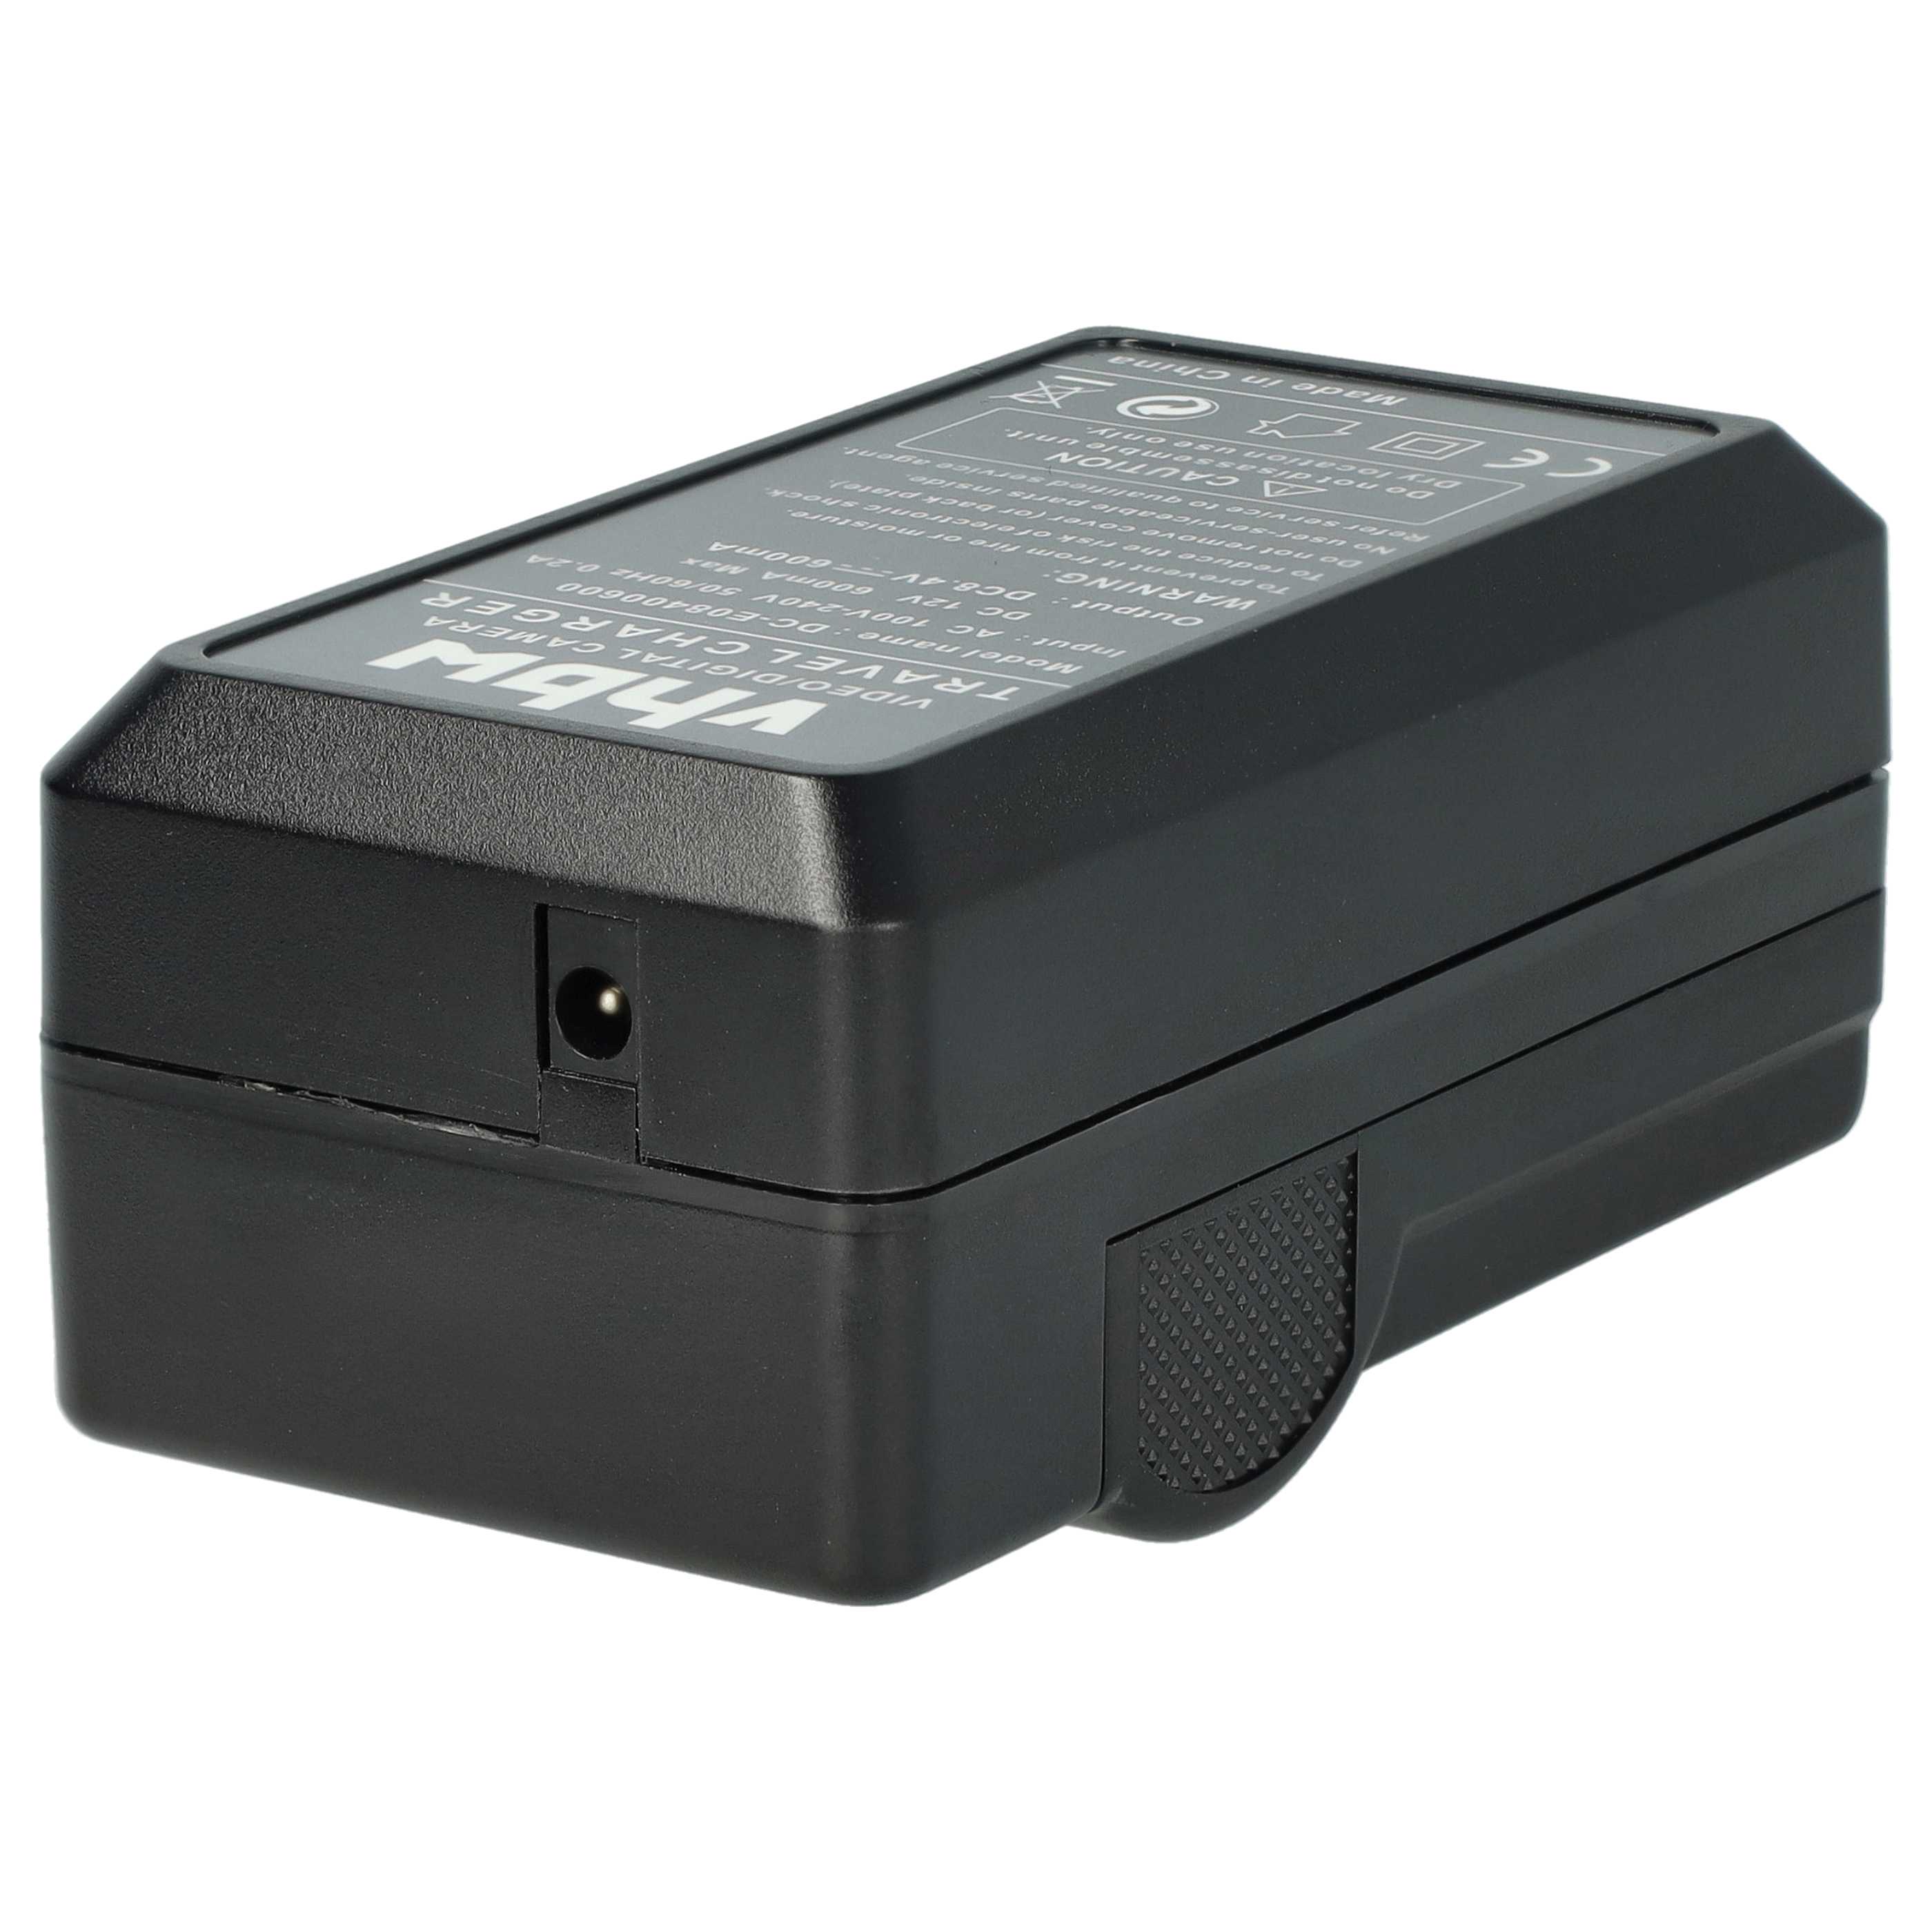 Akku Ladegerät passend für GR-D239 Kamera u.a. - 0,6 A, 8,4 V